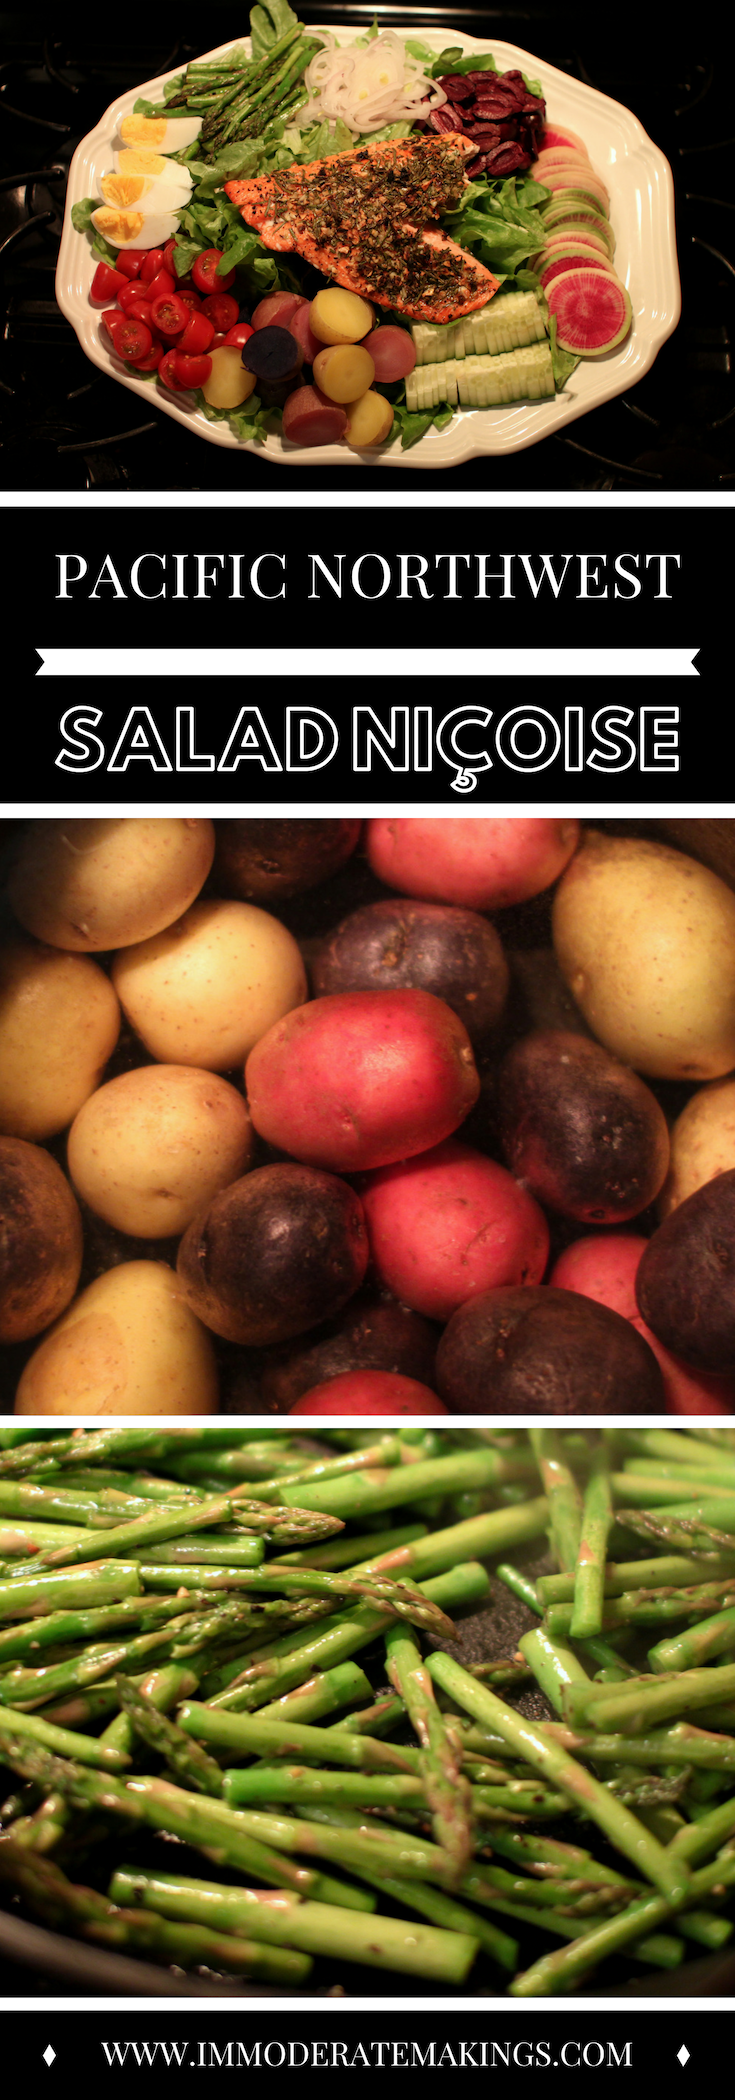 Pacific Northwest Salad Nicoise